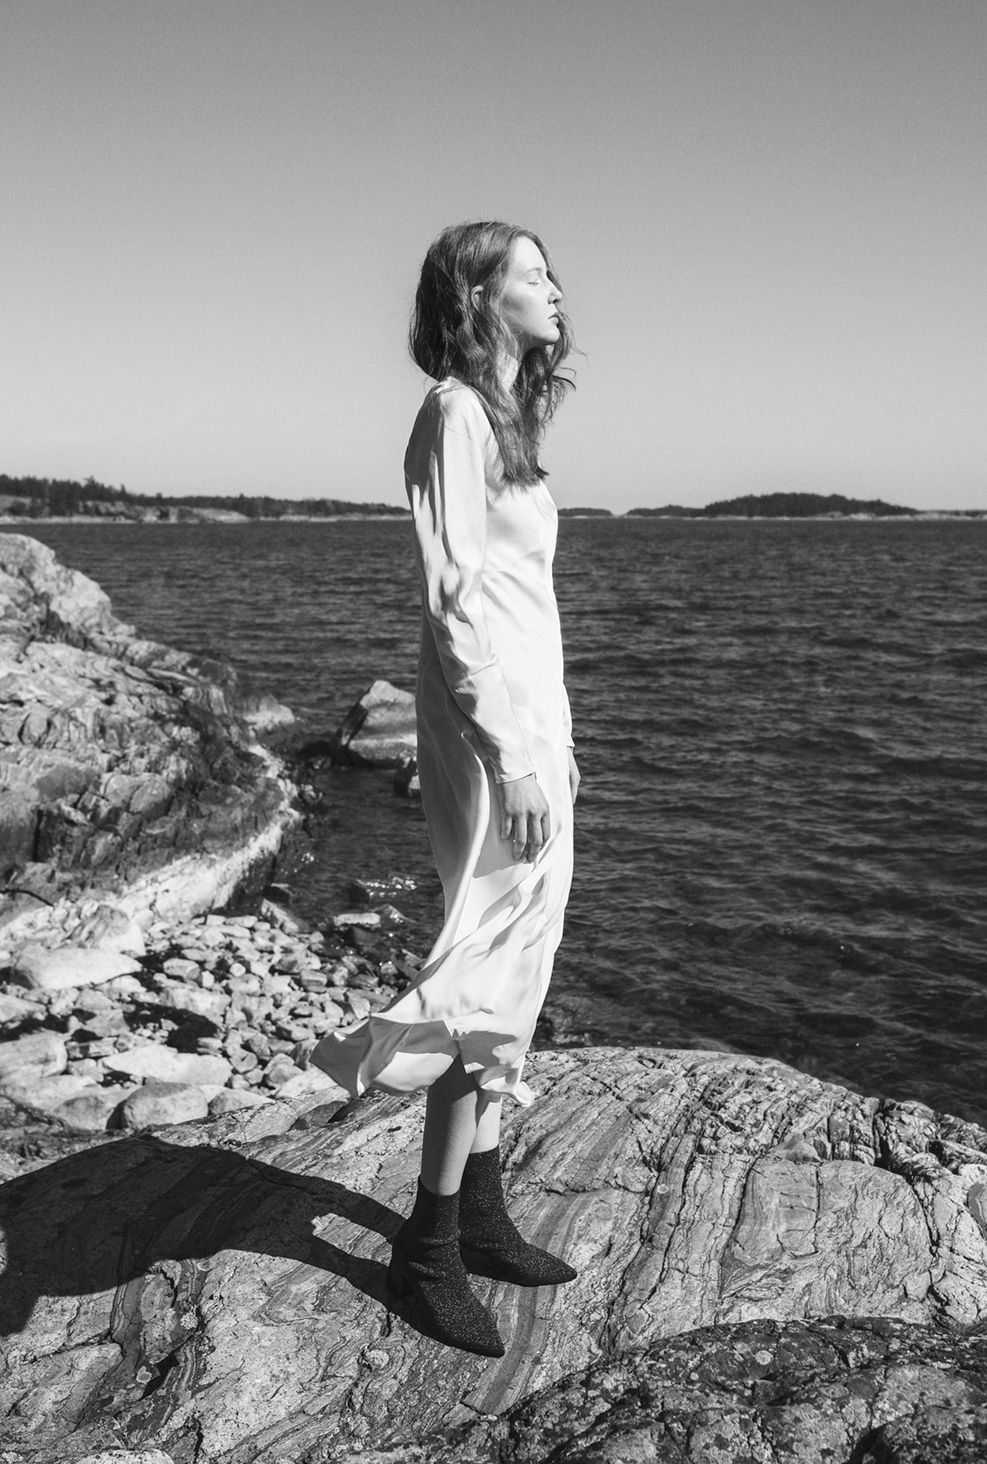 PATRICK-LOUIS VUITTON - Sanna Dahlén - Modefotograf & Reklamfotograf i  Stockholm / Fashion & Commerical Photographer in Stockholm